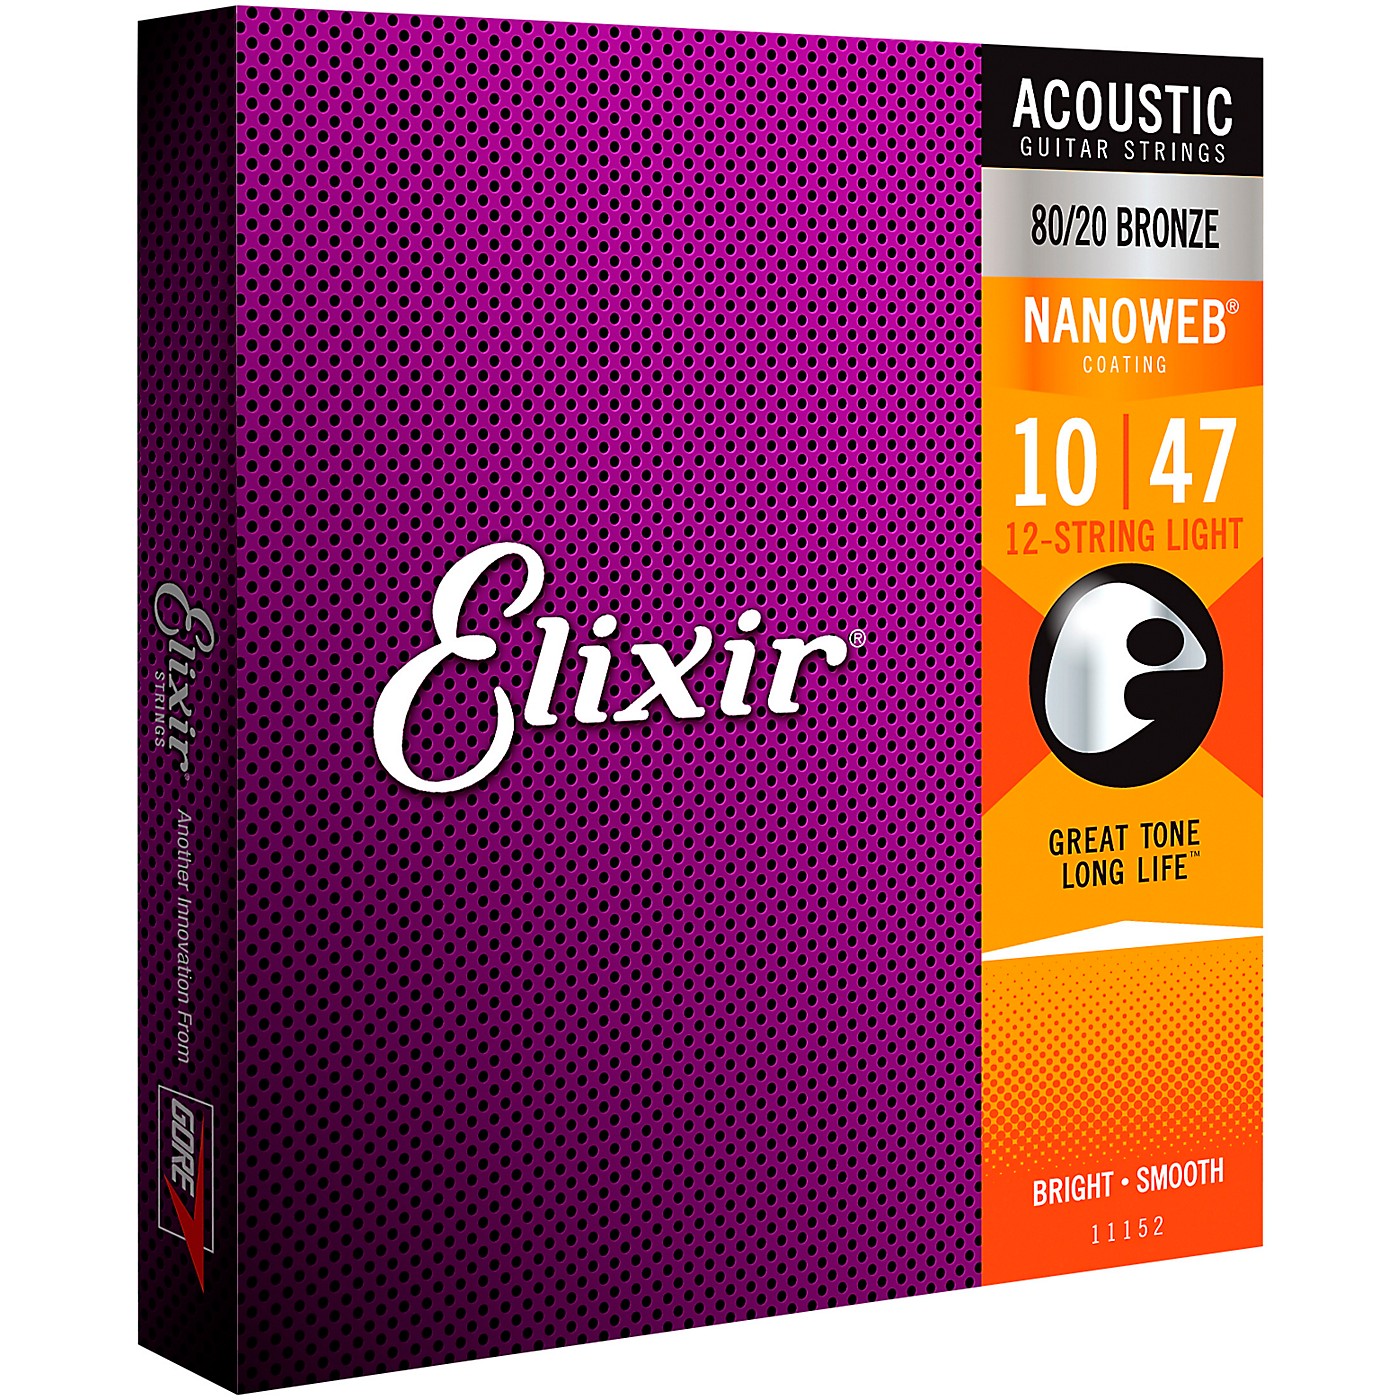 Elixir 80/20 Bronze 12-String Acoustic Guitar Strings with NANOWEB Coating, Light (.010-.047) thumbnail